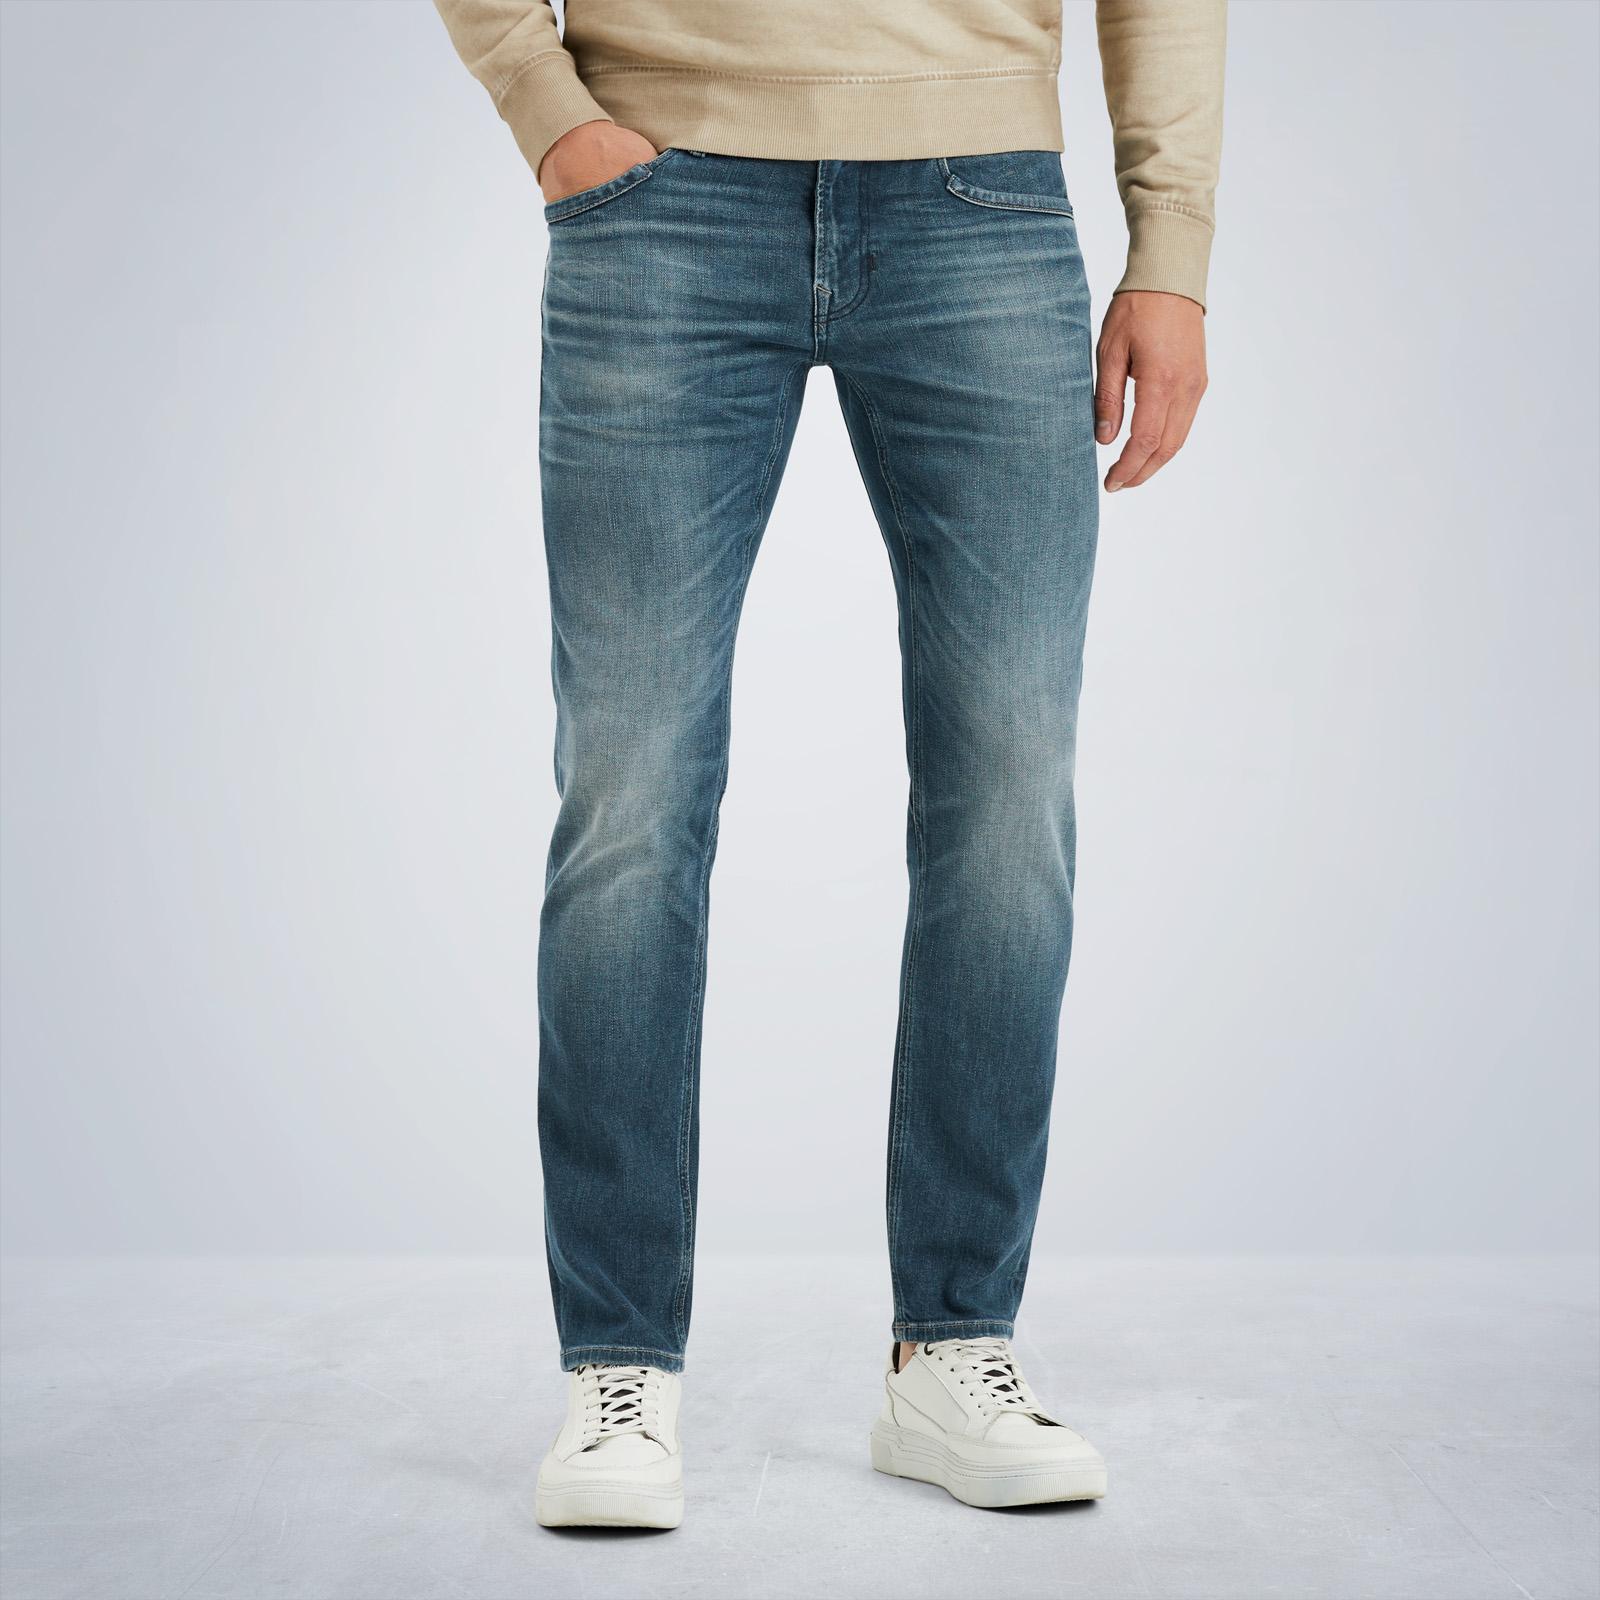 PME Legend slim fit jeans TAILWHEEL greencast